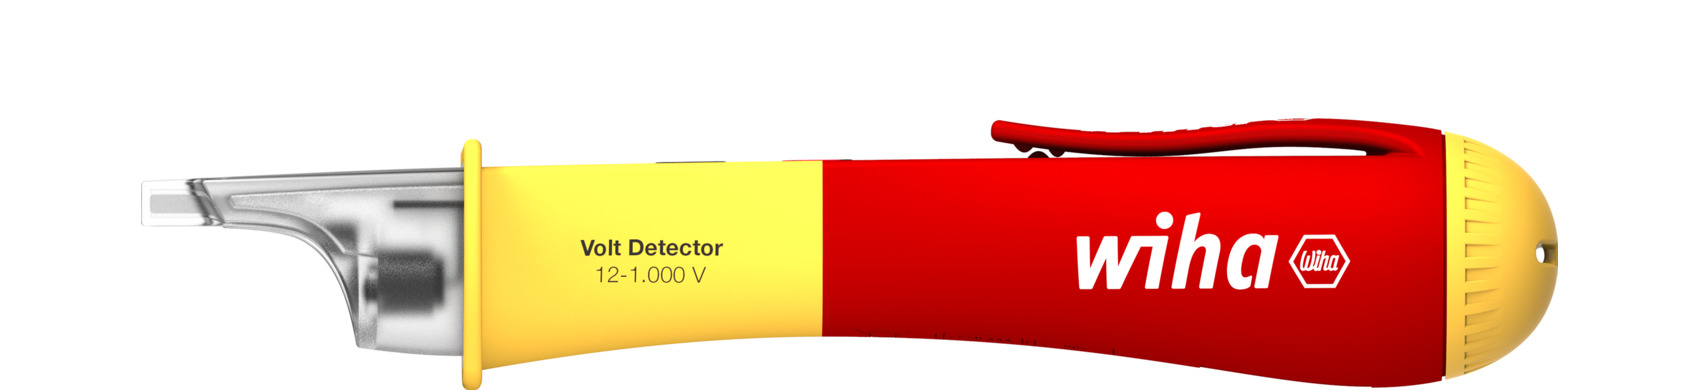 Wiha SB 255-13 Volt Detector Spannungsprüfer 12 - 1000 V 43797